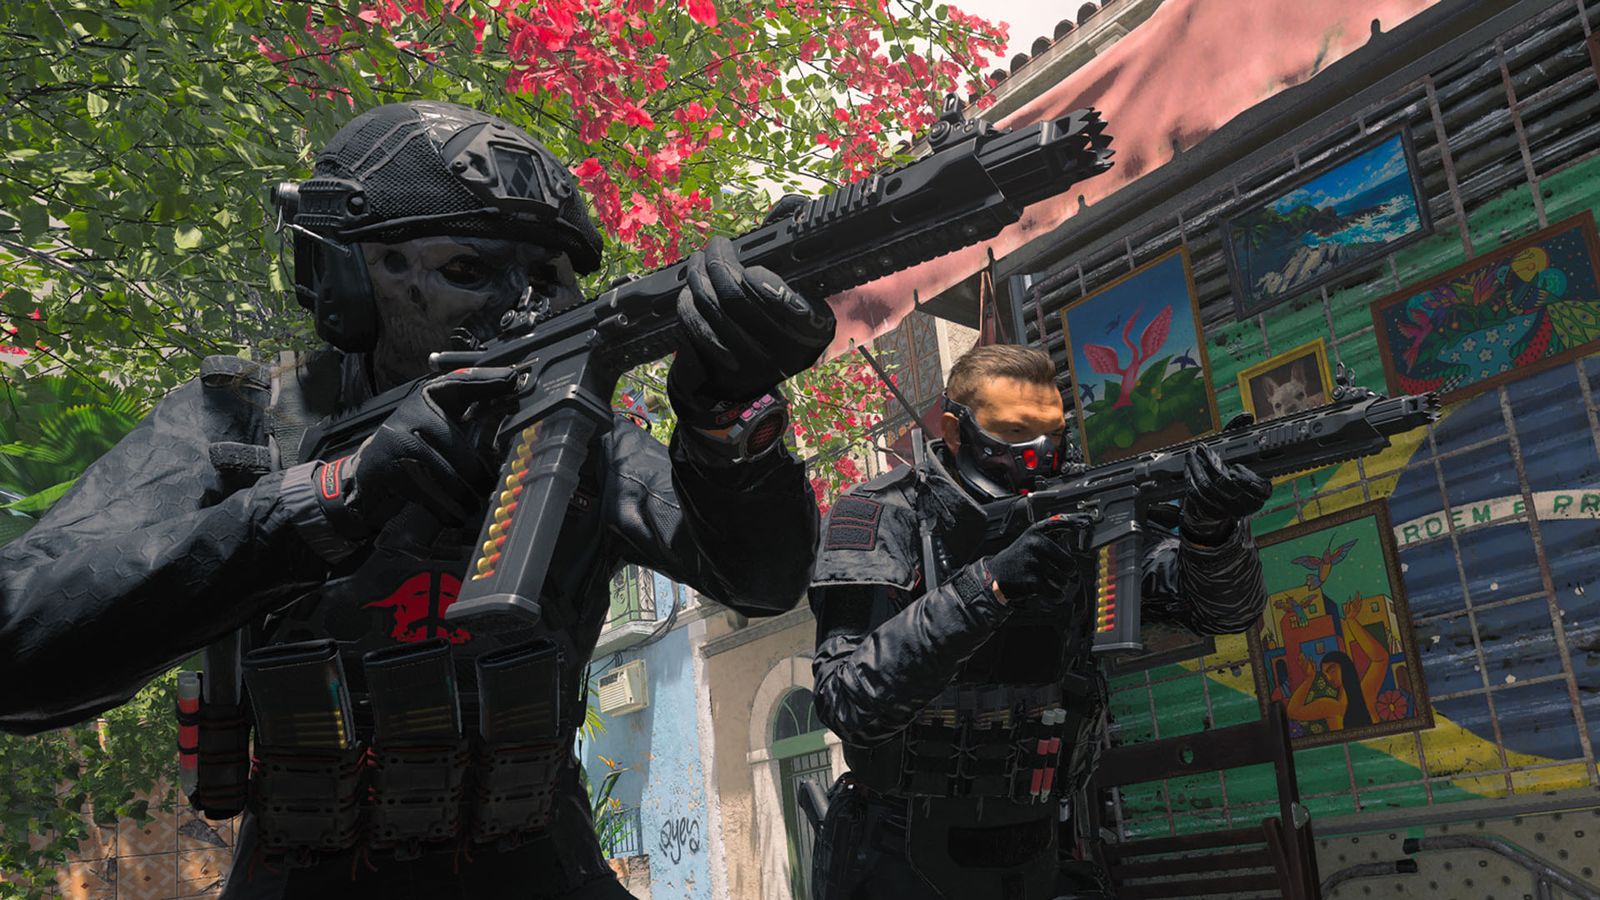 Modern Warfare 3 players aiming down sights of rifle